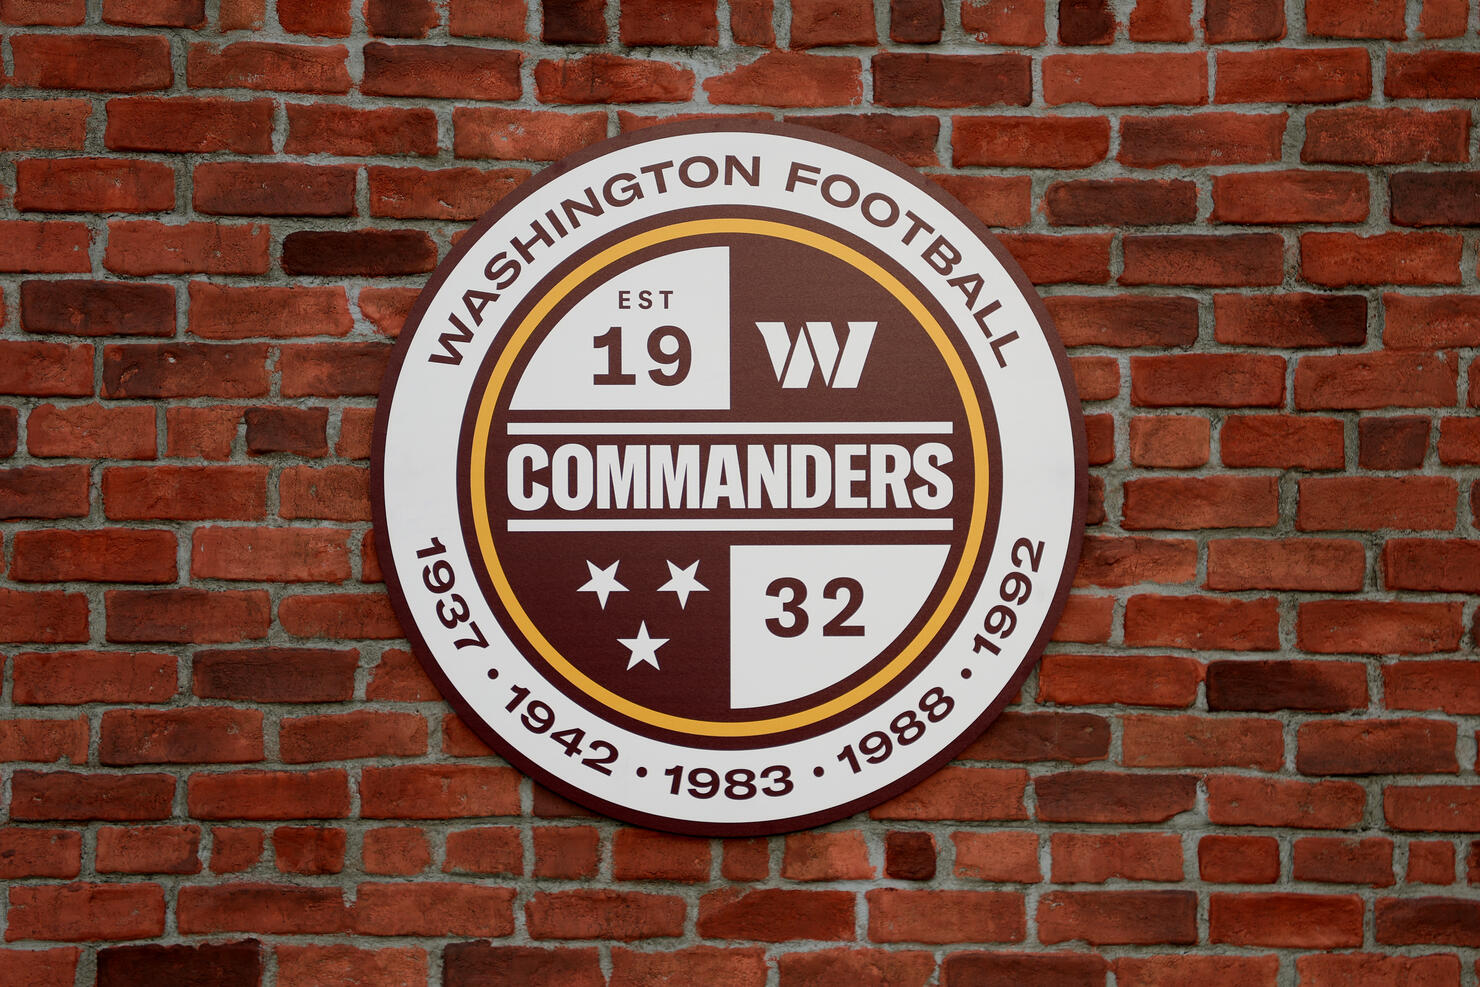 Washington Football Team Announces Name Change to Washington Commanders